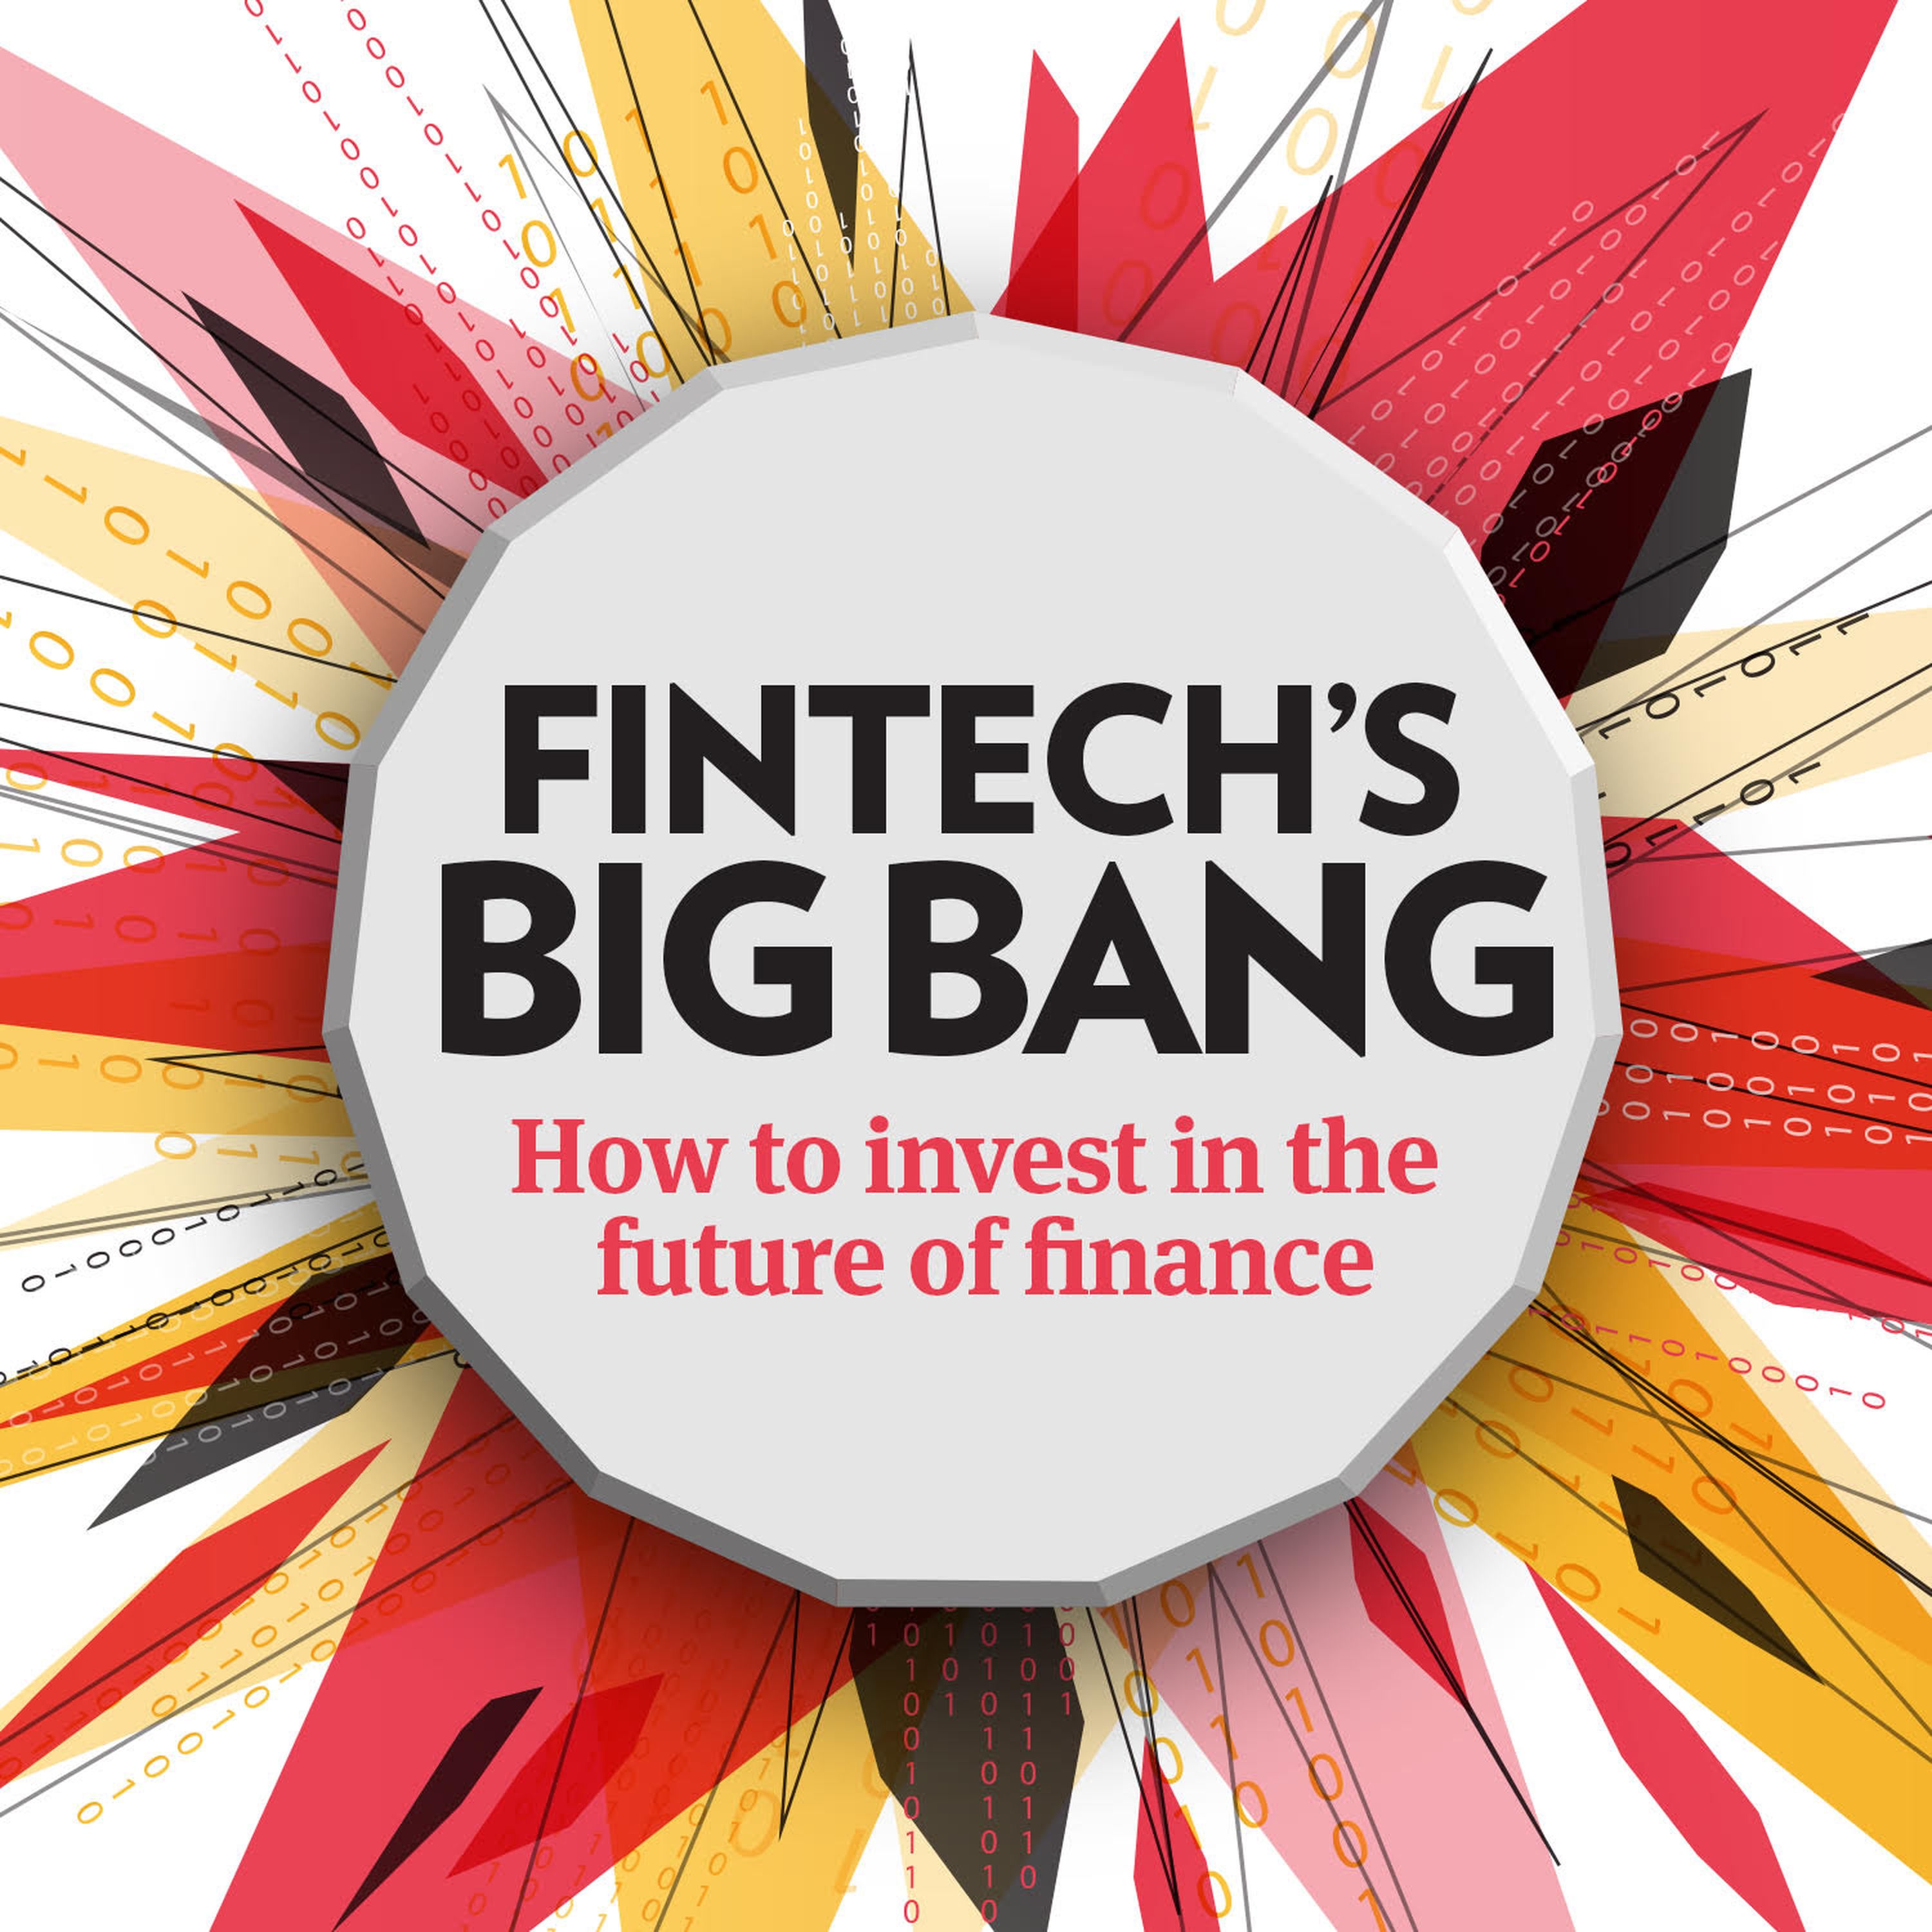 Companies & Markets show: Fintech's big bang